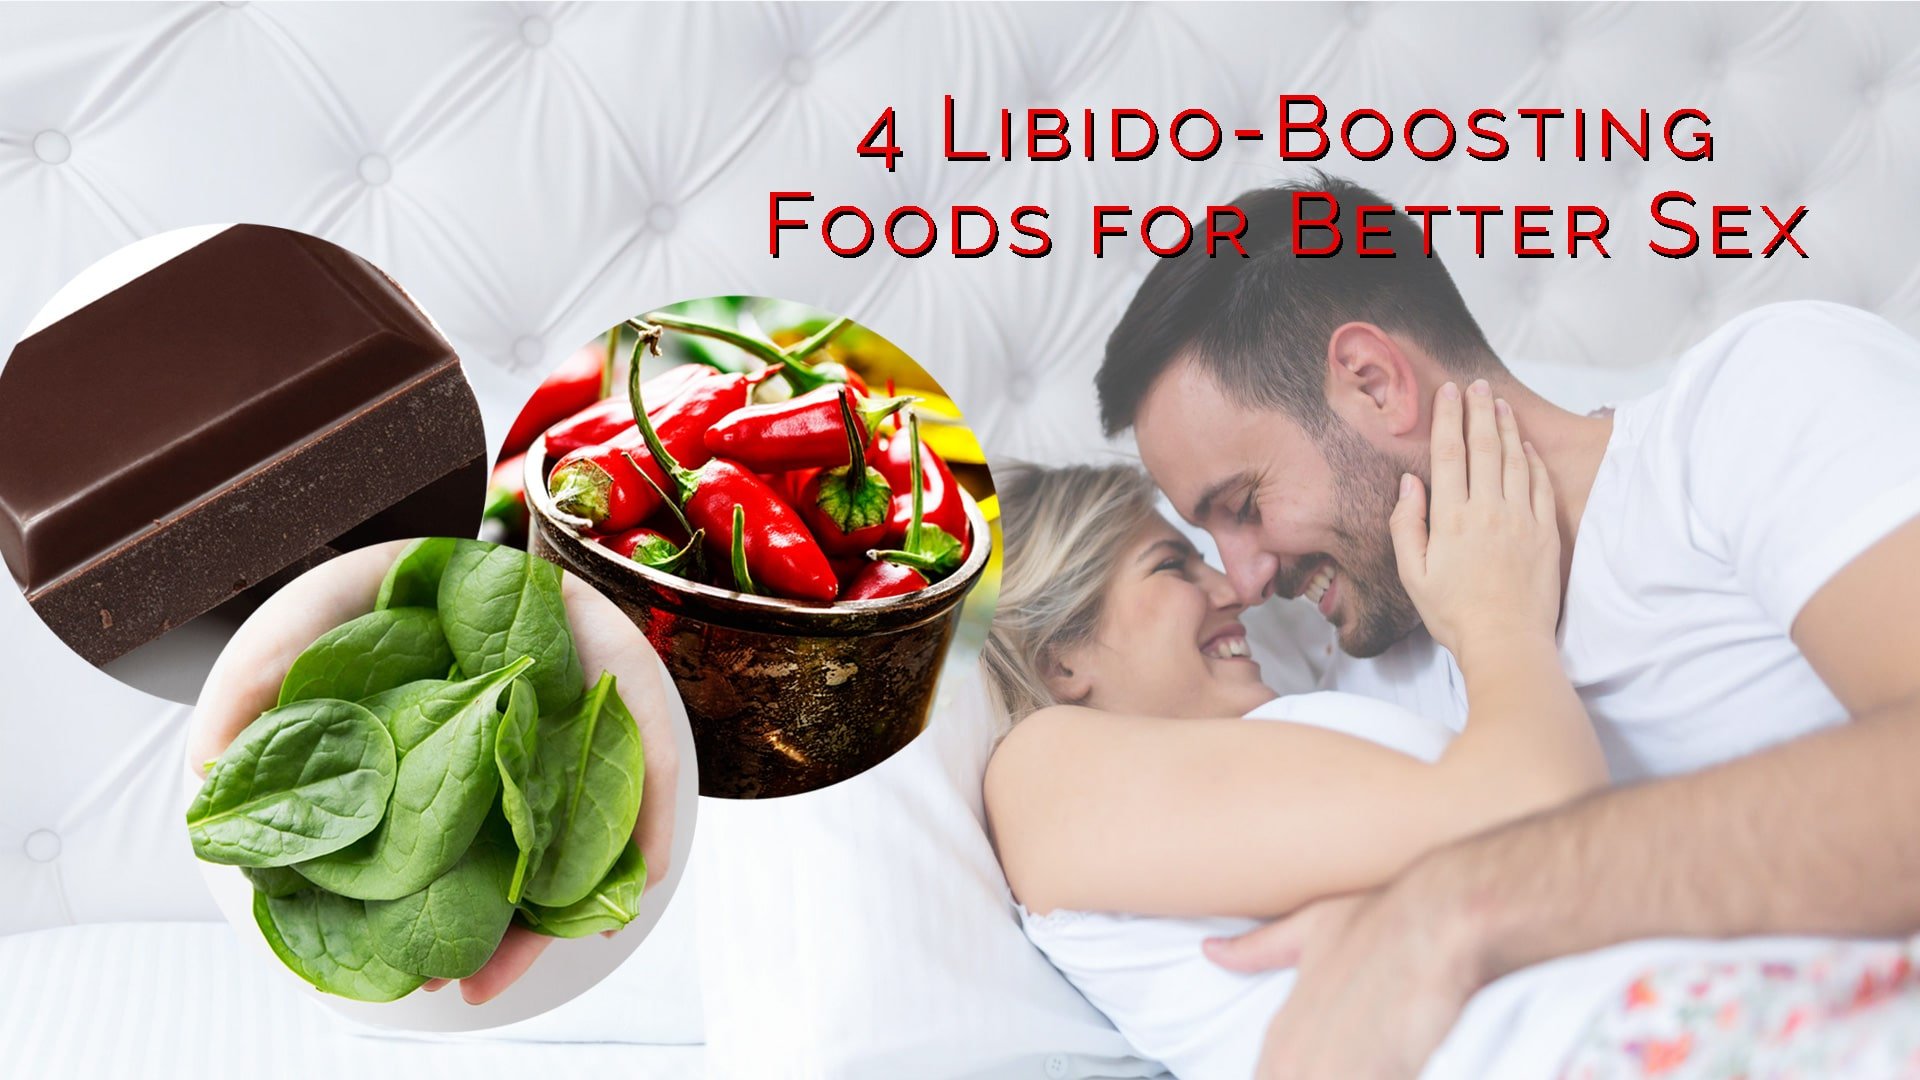 Libido Boosting Foods